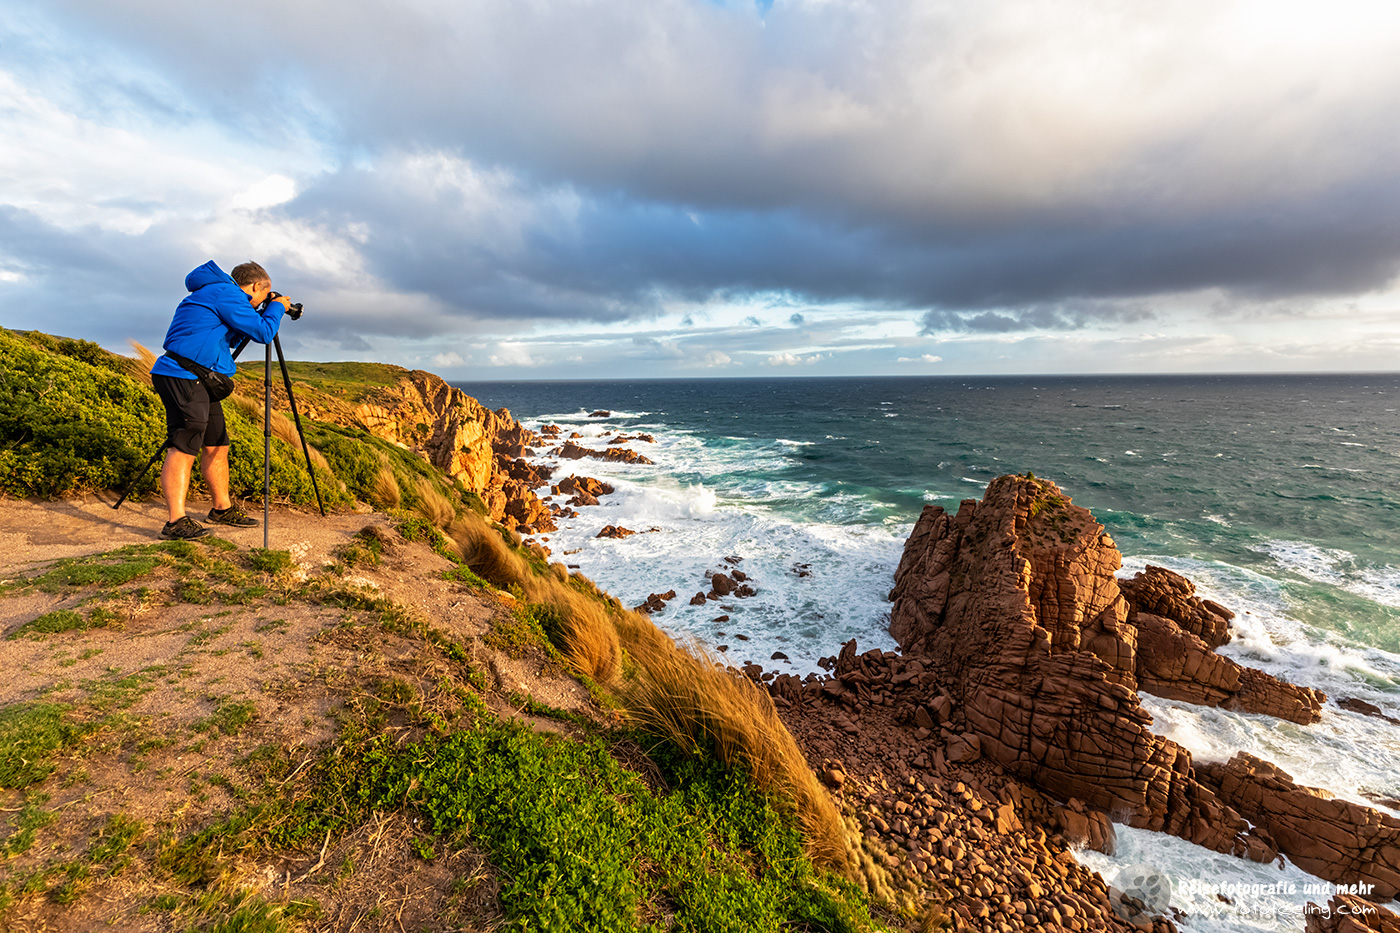 Chris am Pinnacles Lookout, Philip Island, Victoria, Australien